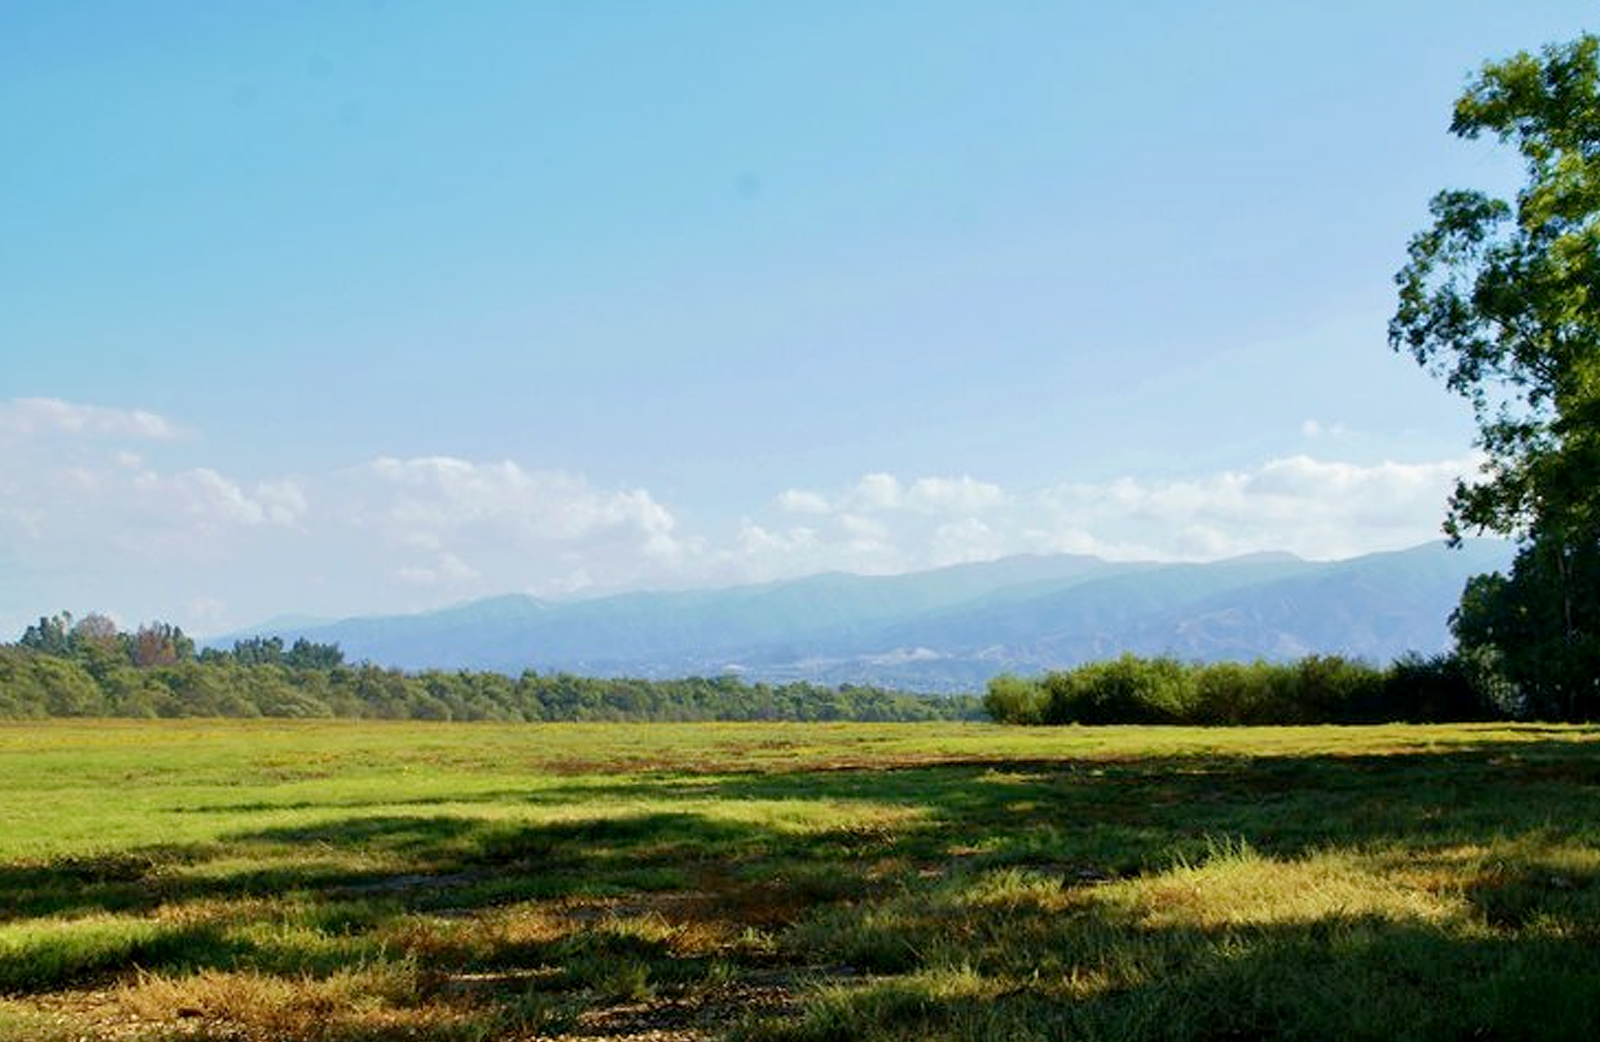 The Prado dog park field with grass and trees.